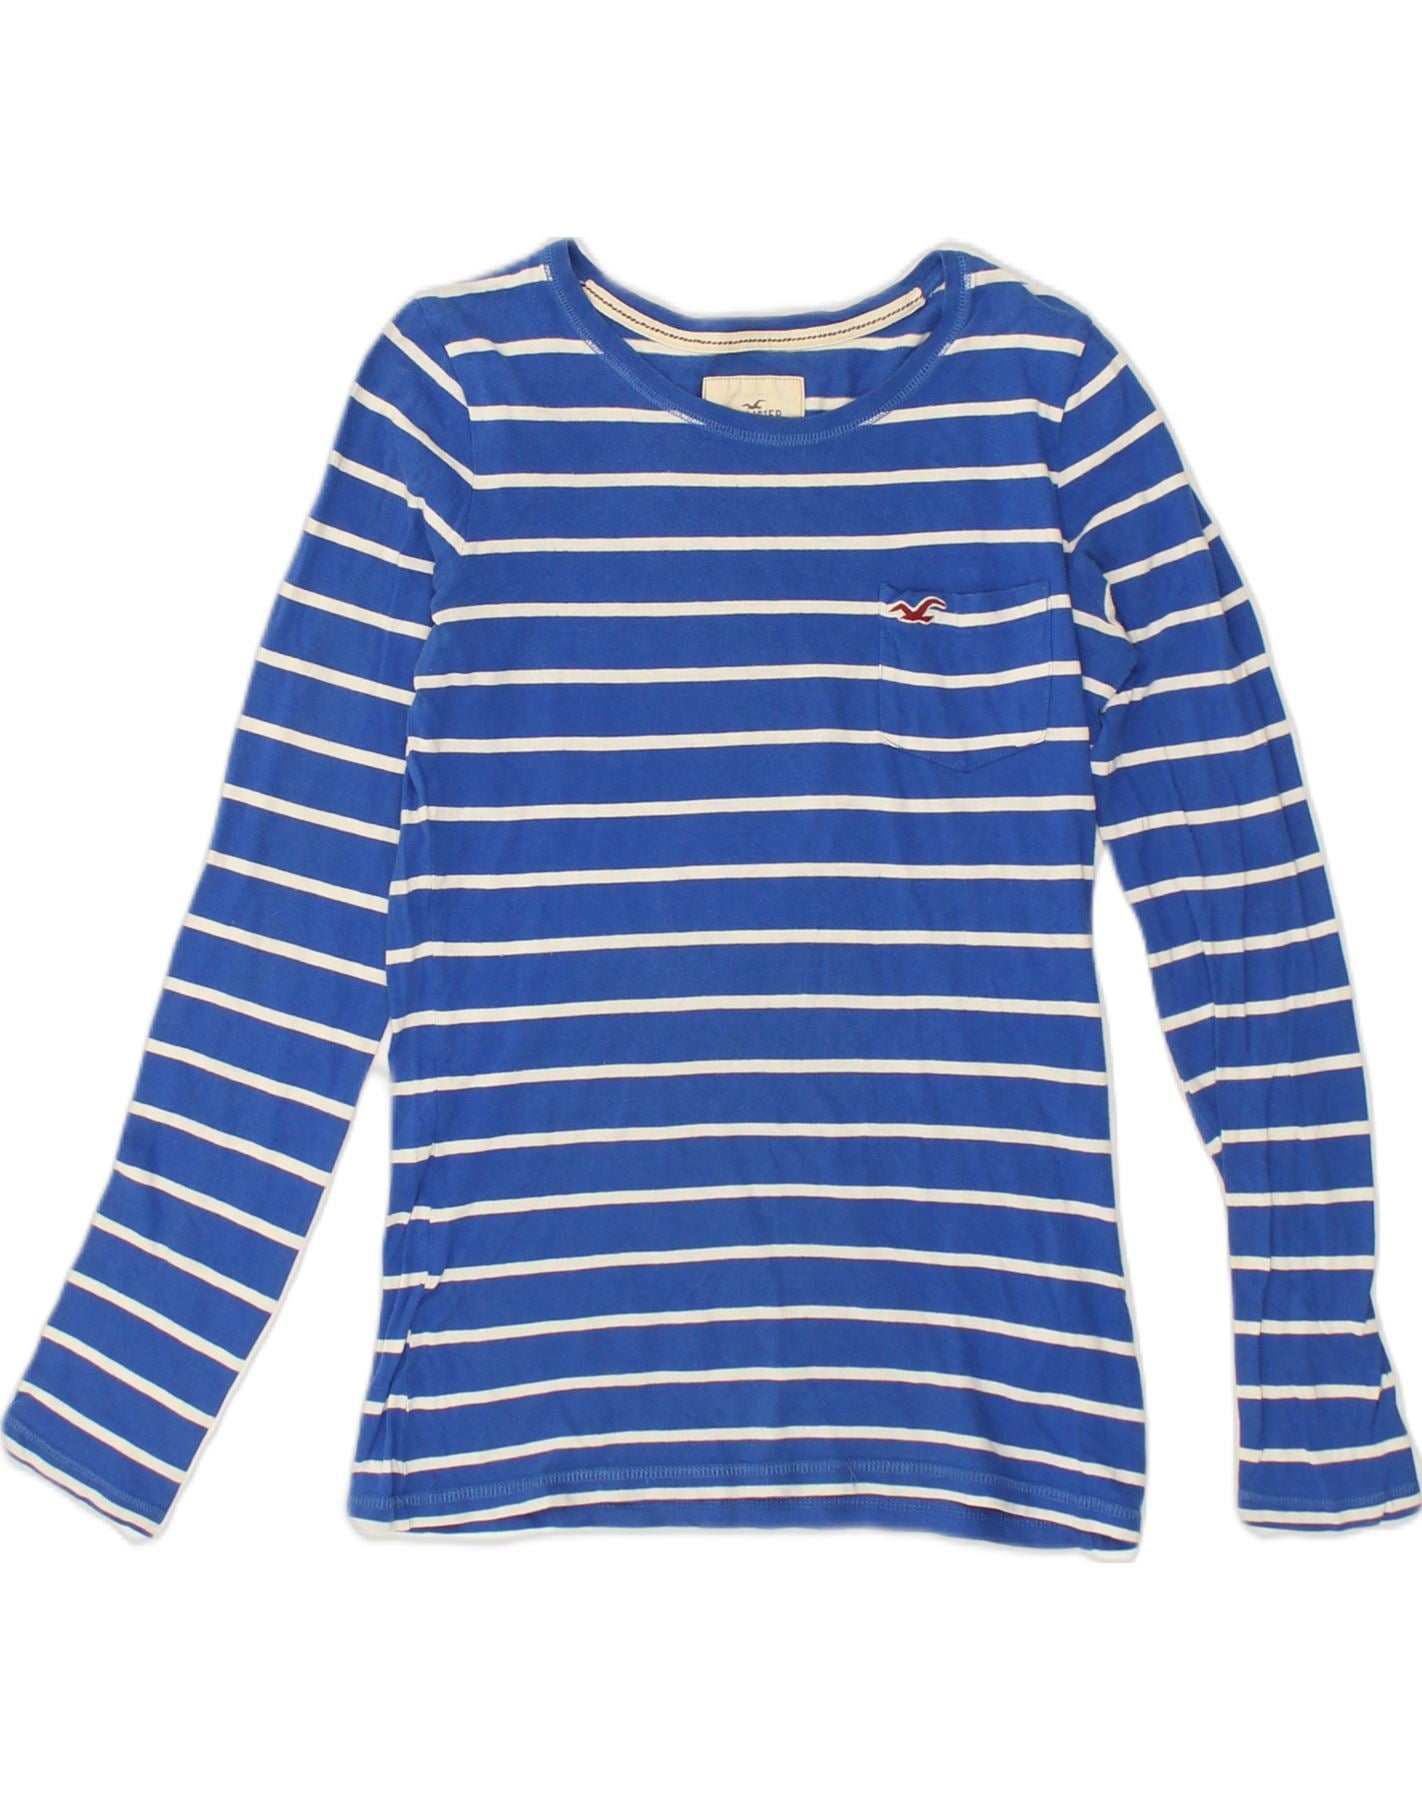 Hollister Women's Blue & White Striped Long Sleeve Shirt Small